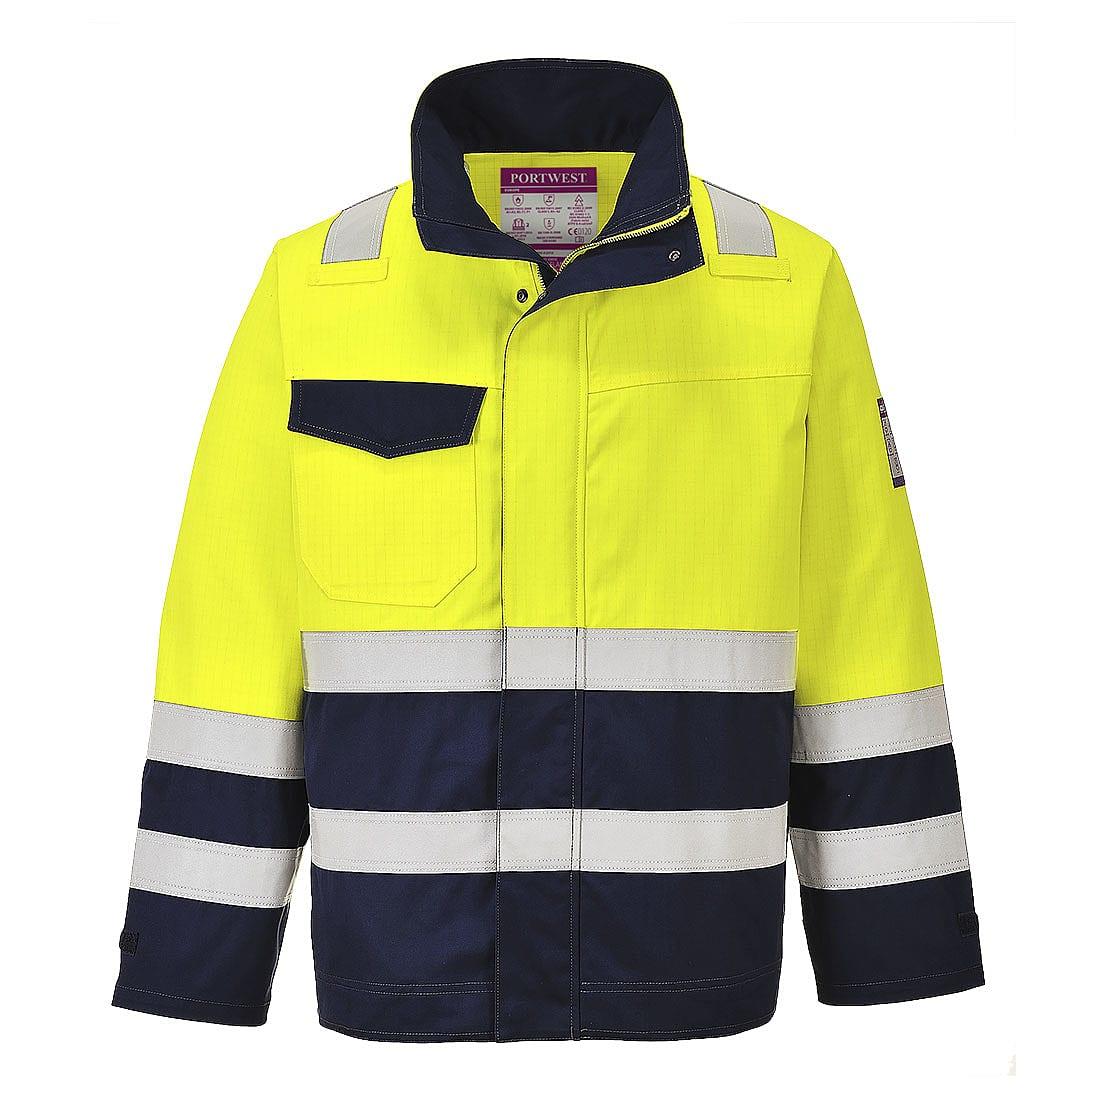 Portwest Hi-Viz Modaflame Jacket in Yellow / Navy (Product Code: MV25)